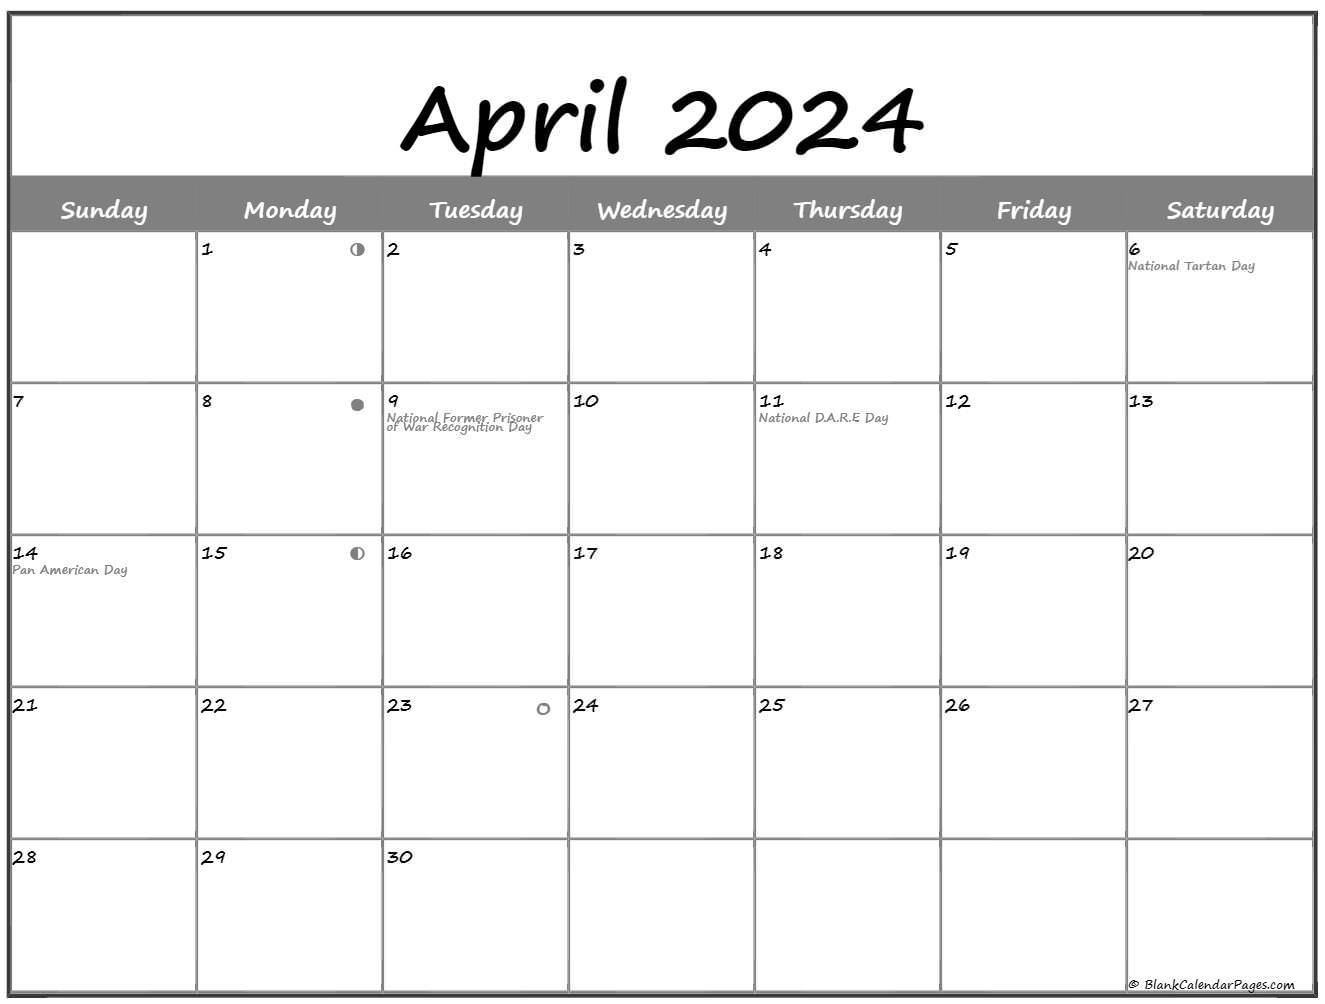 lunar calendar april 2021 April 2021 Lunar Calendar Moon Phase Calendar lunar calendar april 2021